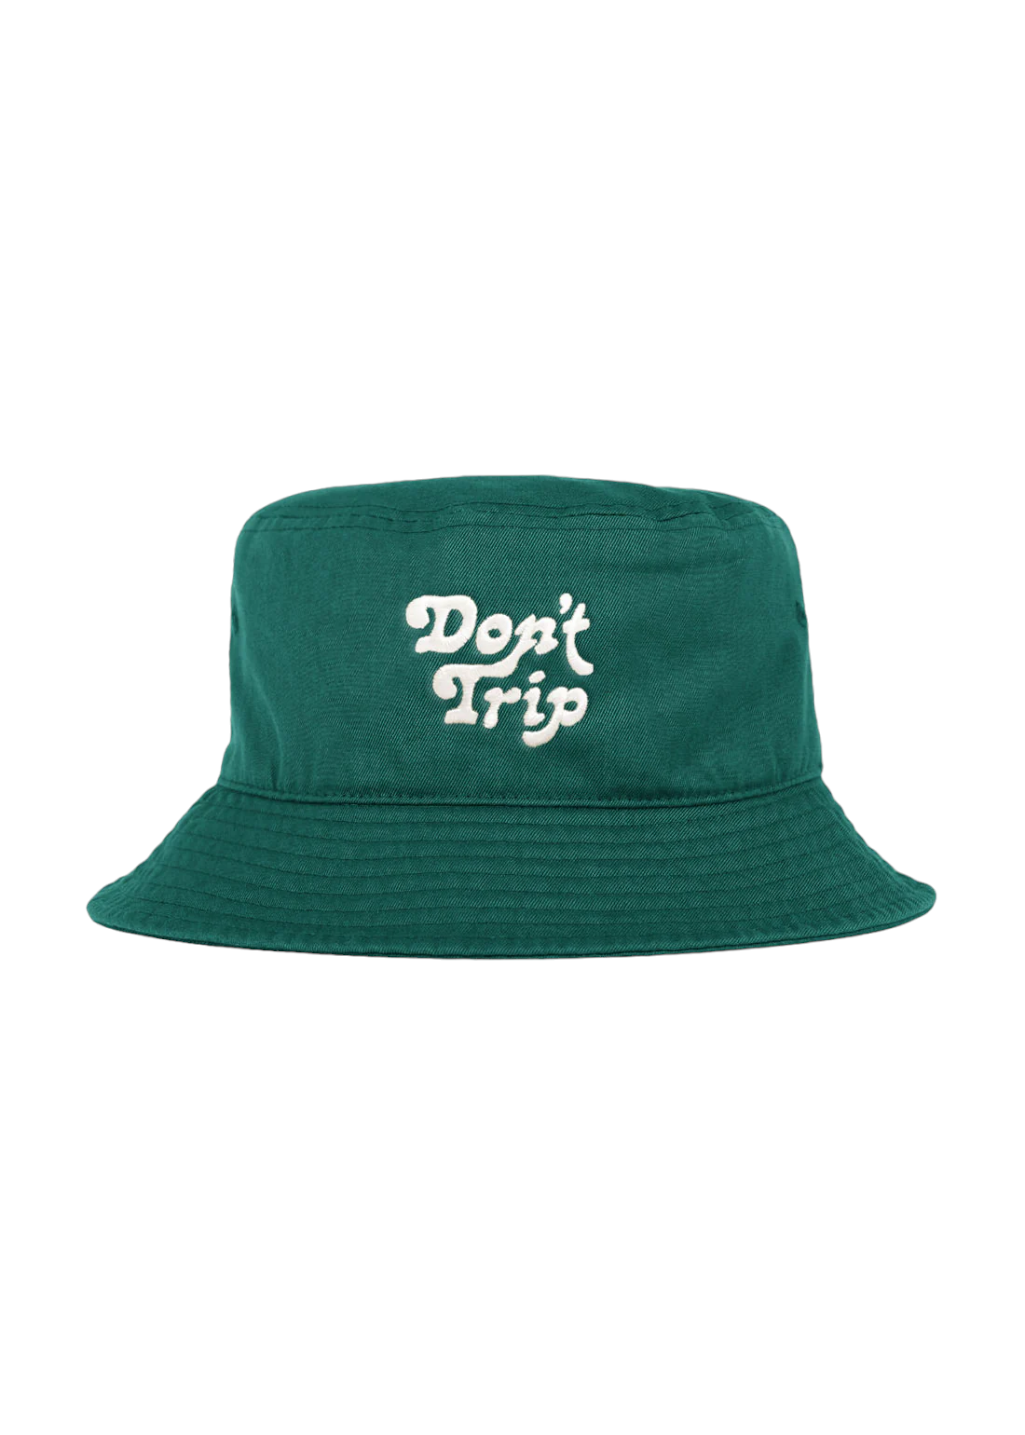 Free & Easy - Don't Trip Bucket Hat - Green